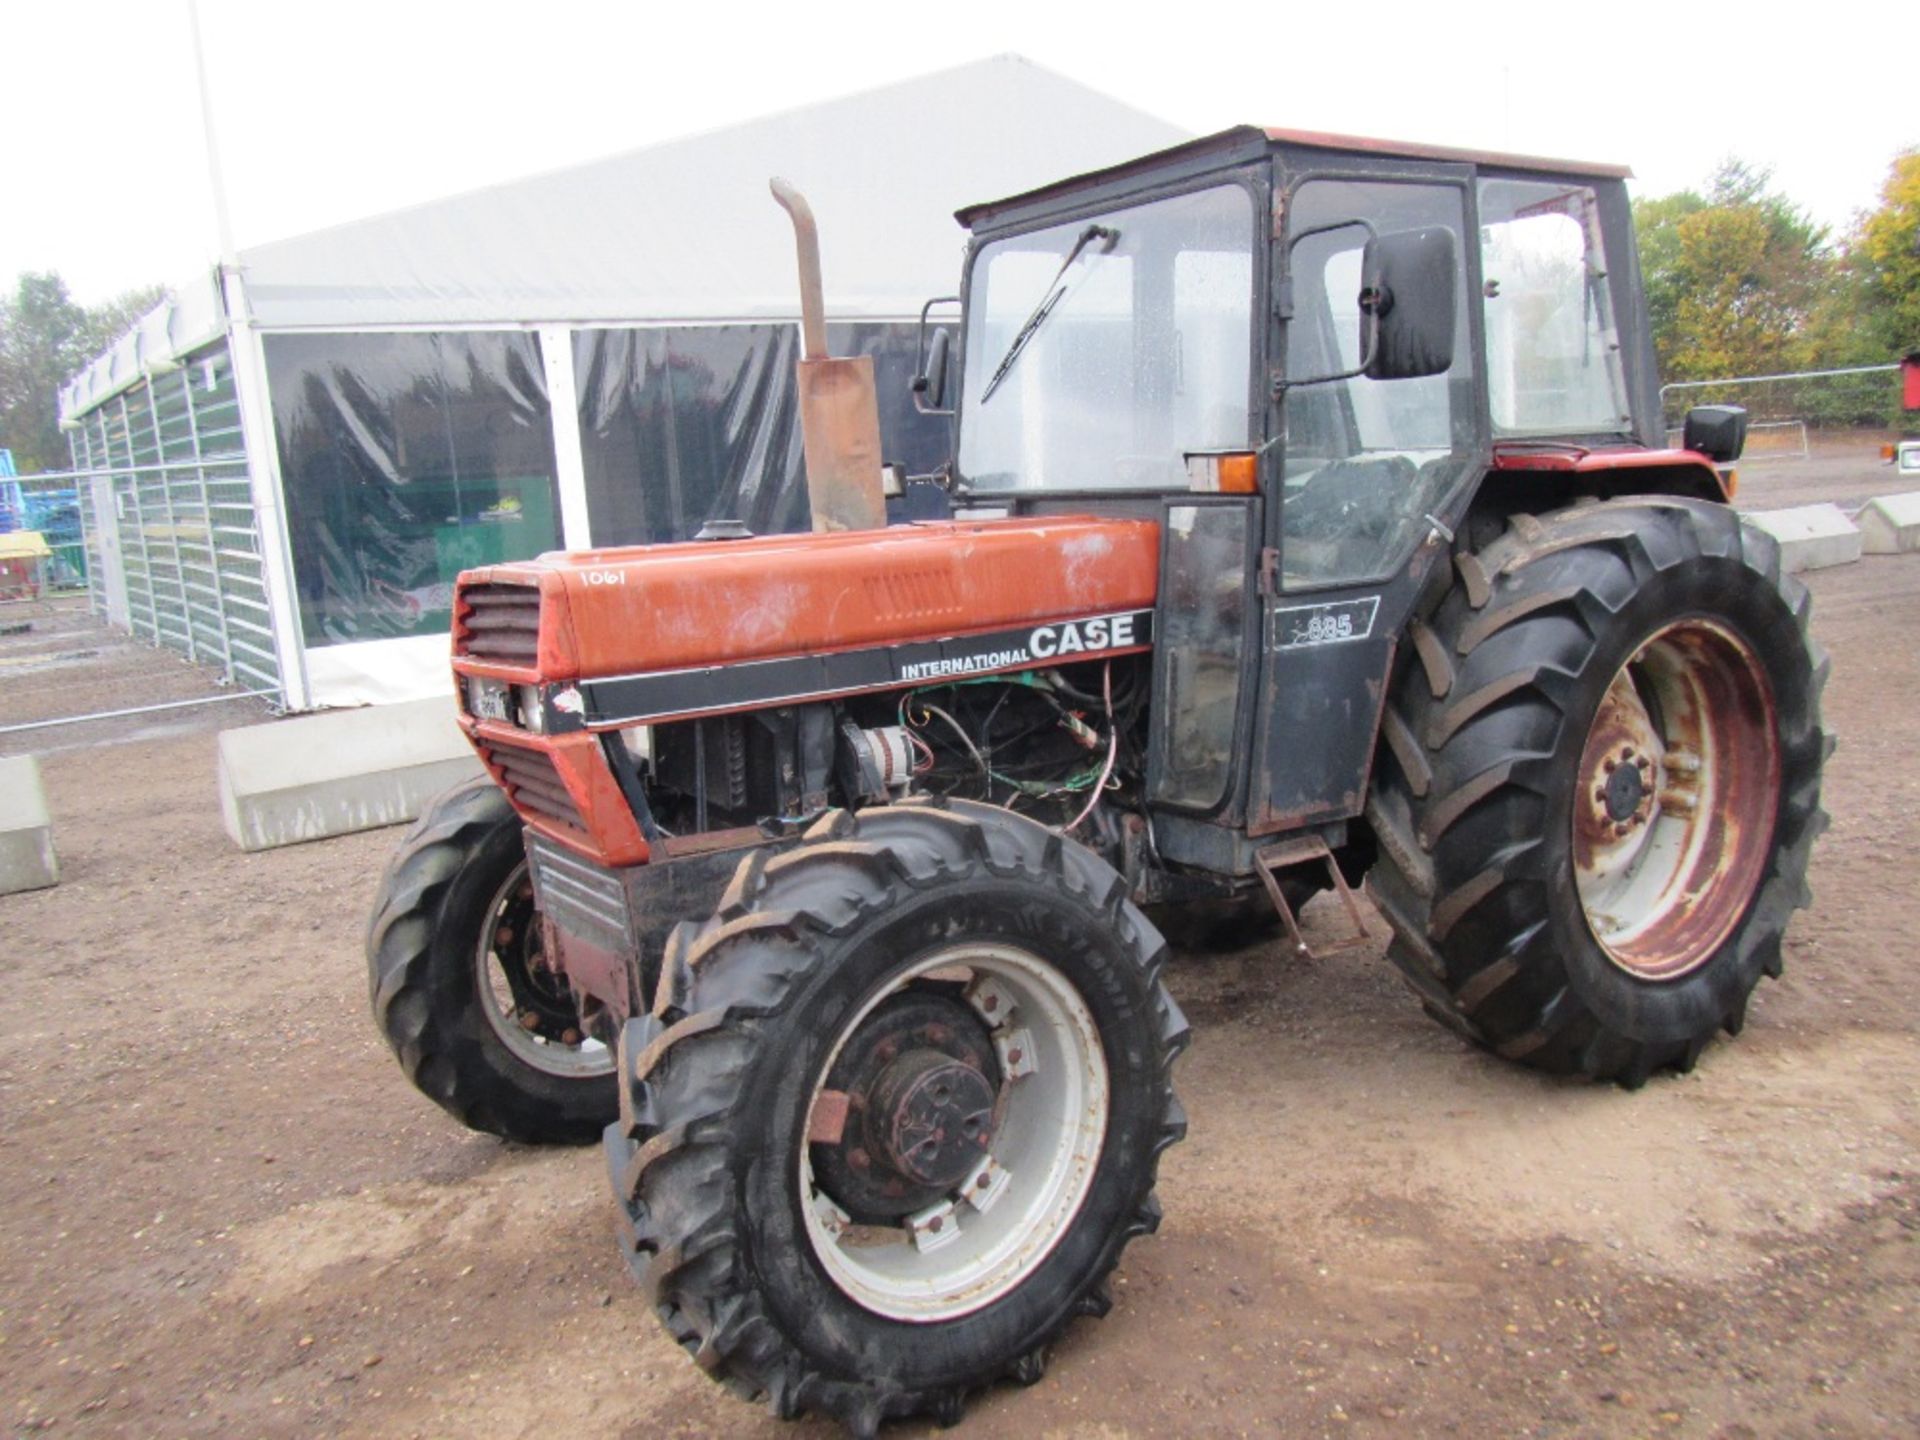 Case International 885 LP 4wd Tractor Reg No D310 HVF